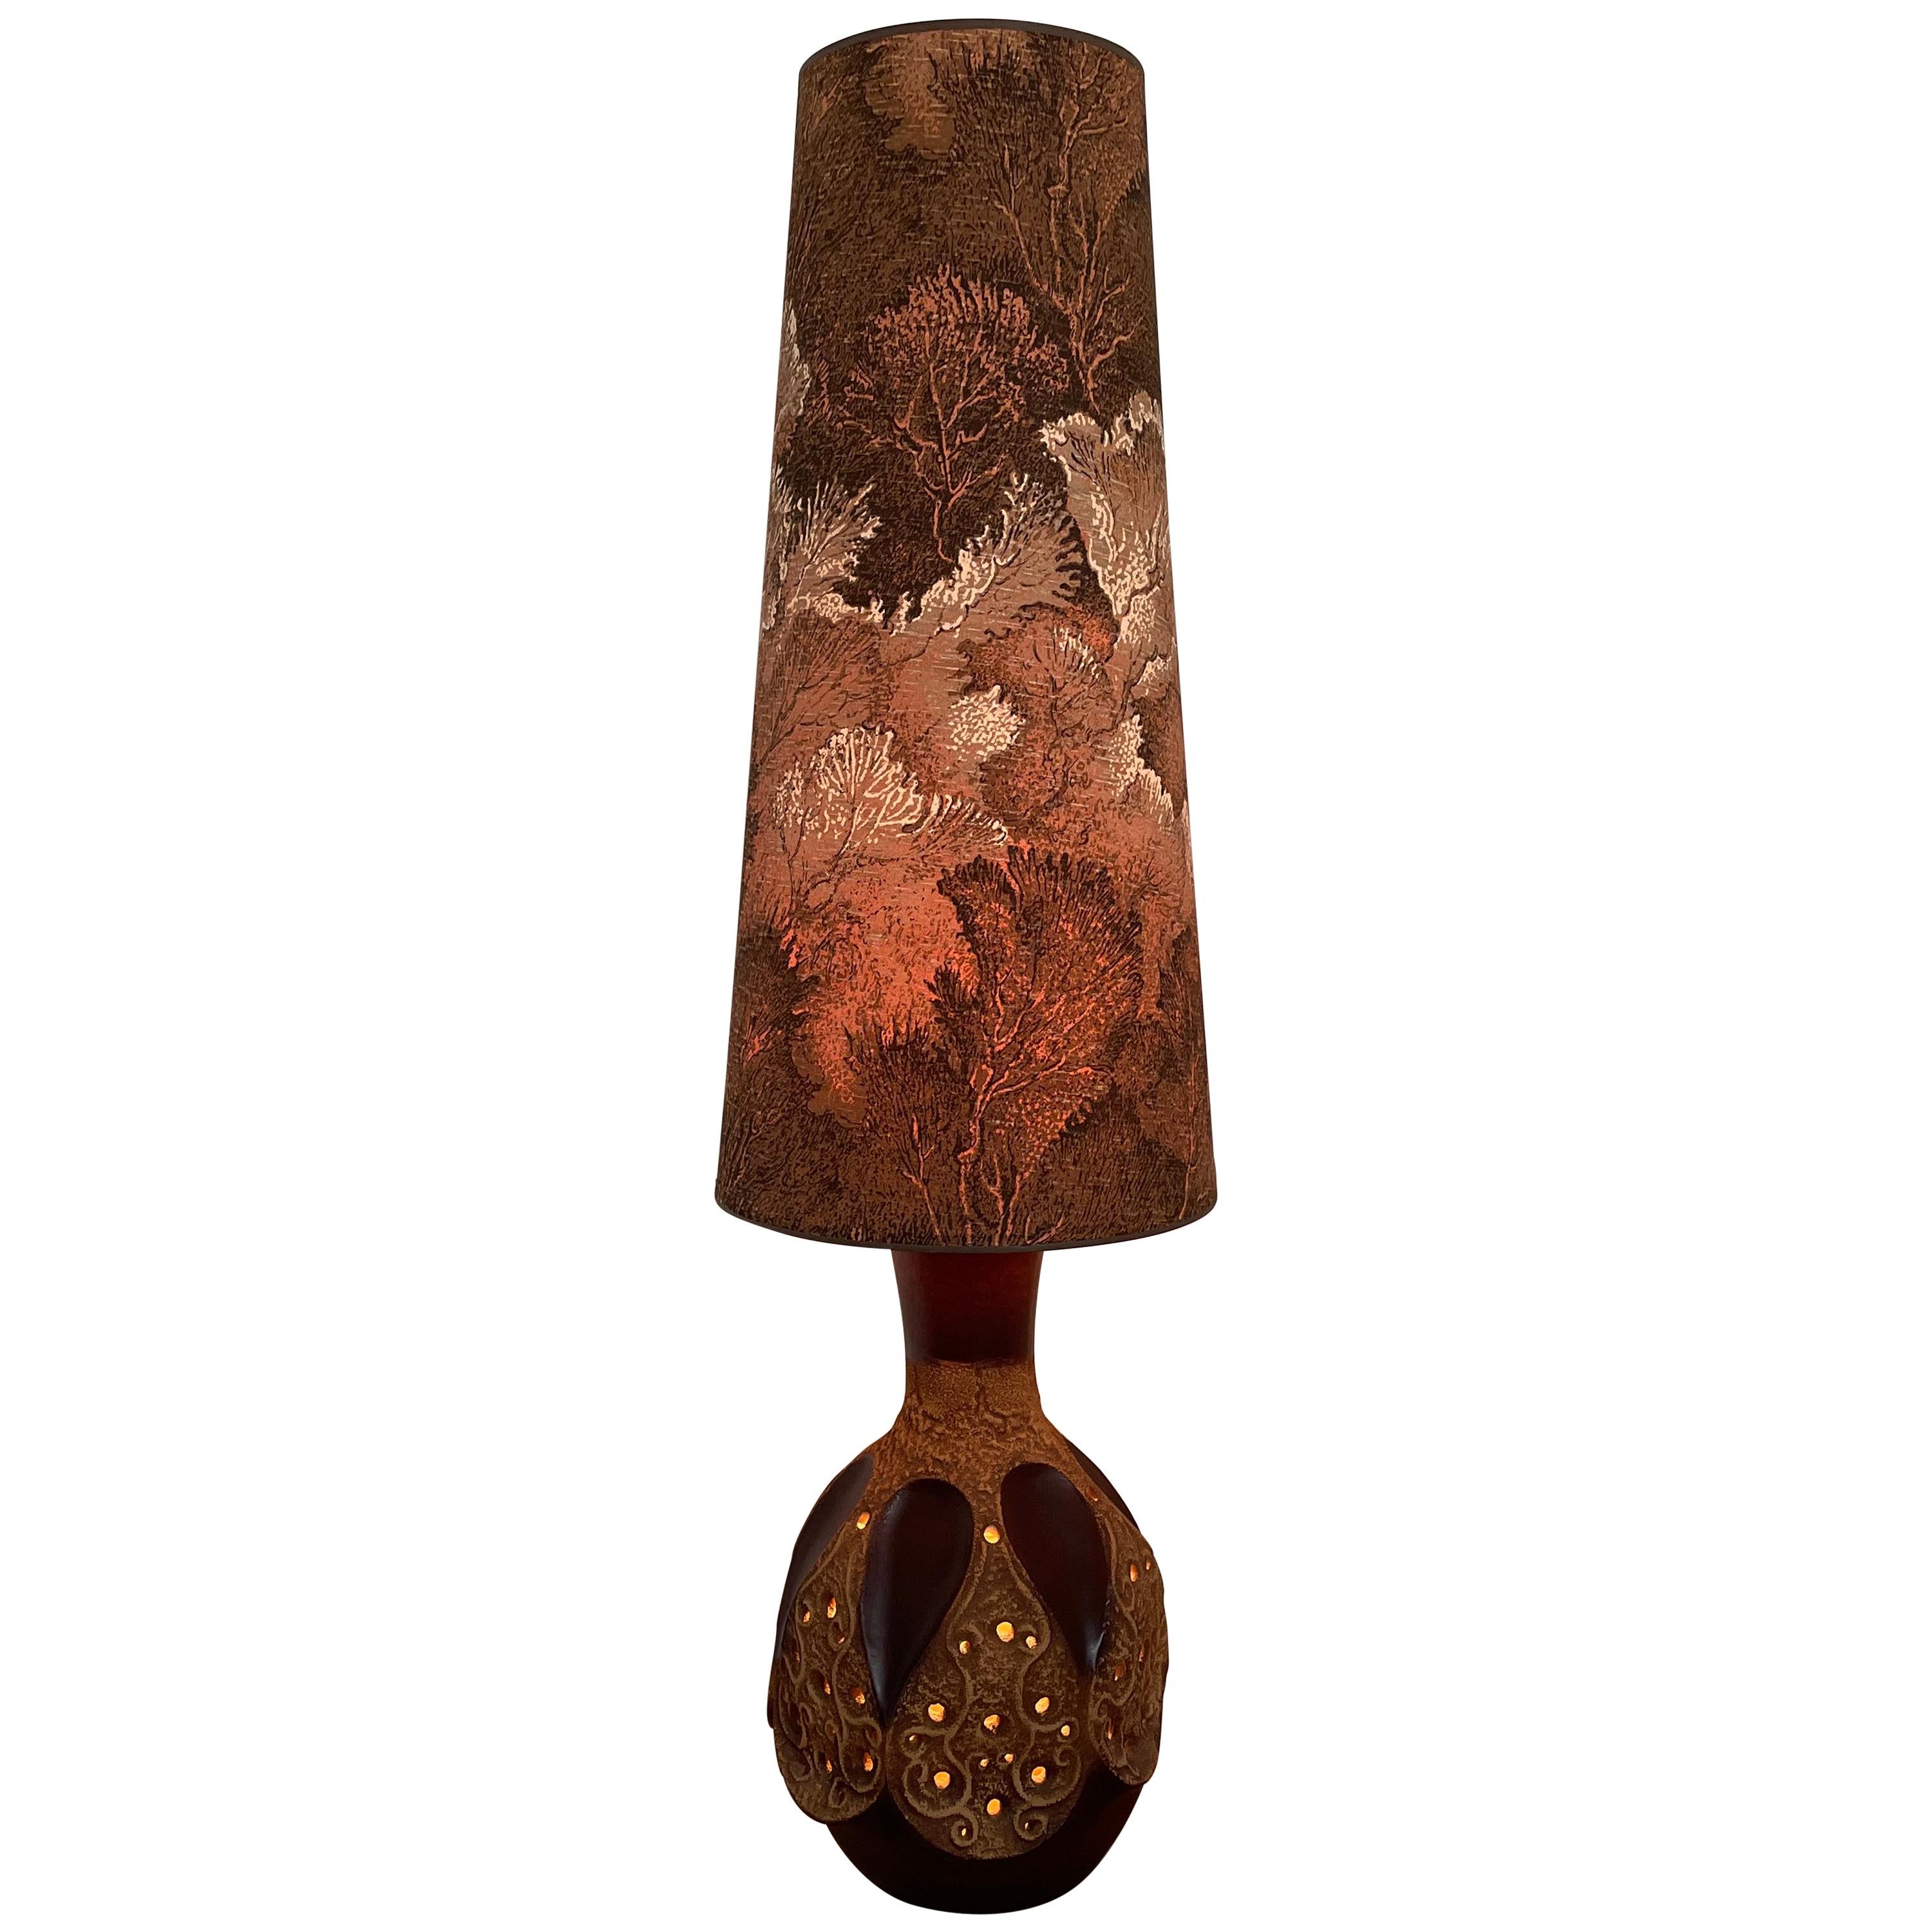 Midcentury Tall 1970s Ceramic Floor Lamp and Shade